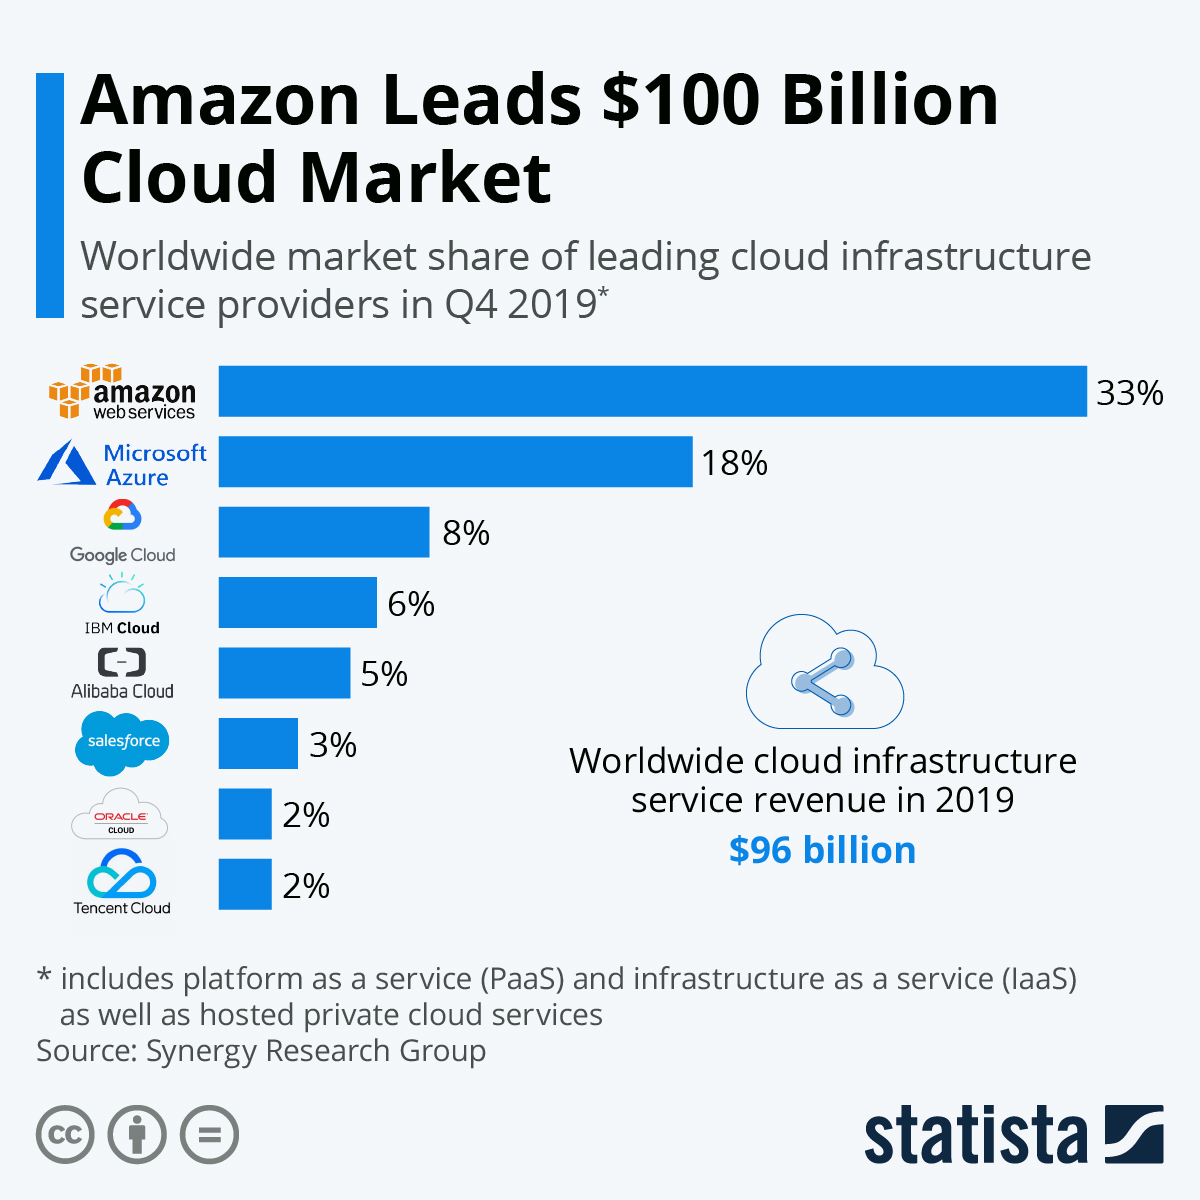 Fonte: https://www.statista.com/chart/18819/worldwide-market-share-of-leading-cloud-infrastructure-service-providers/